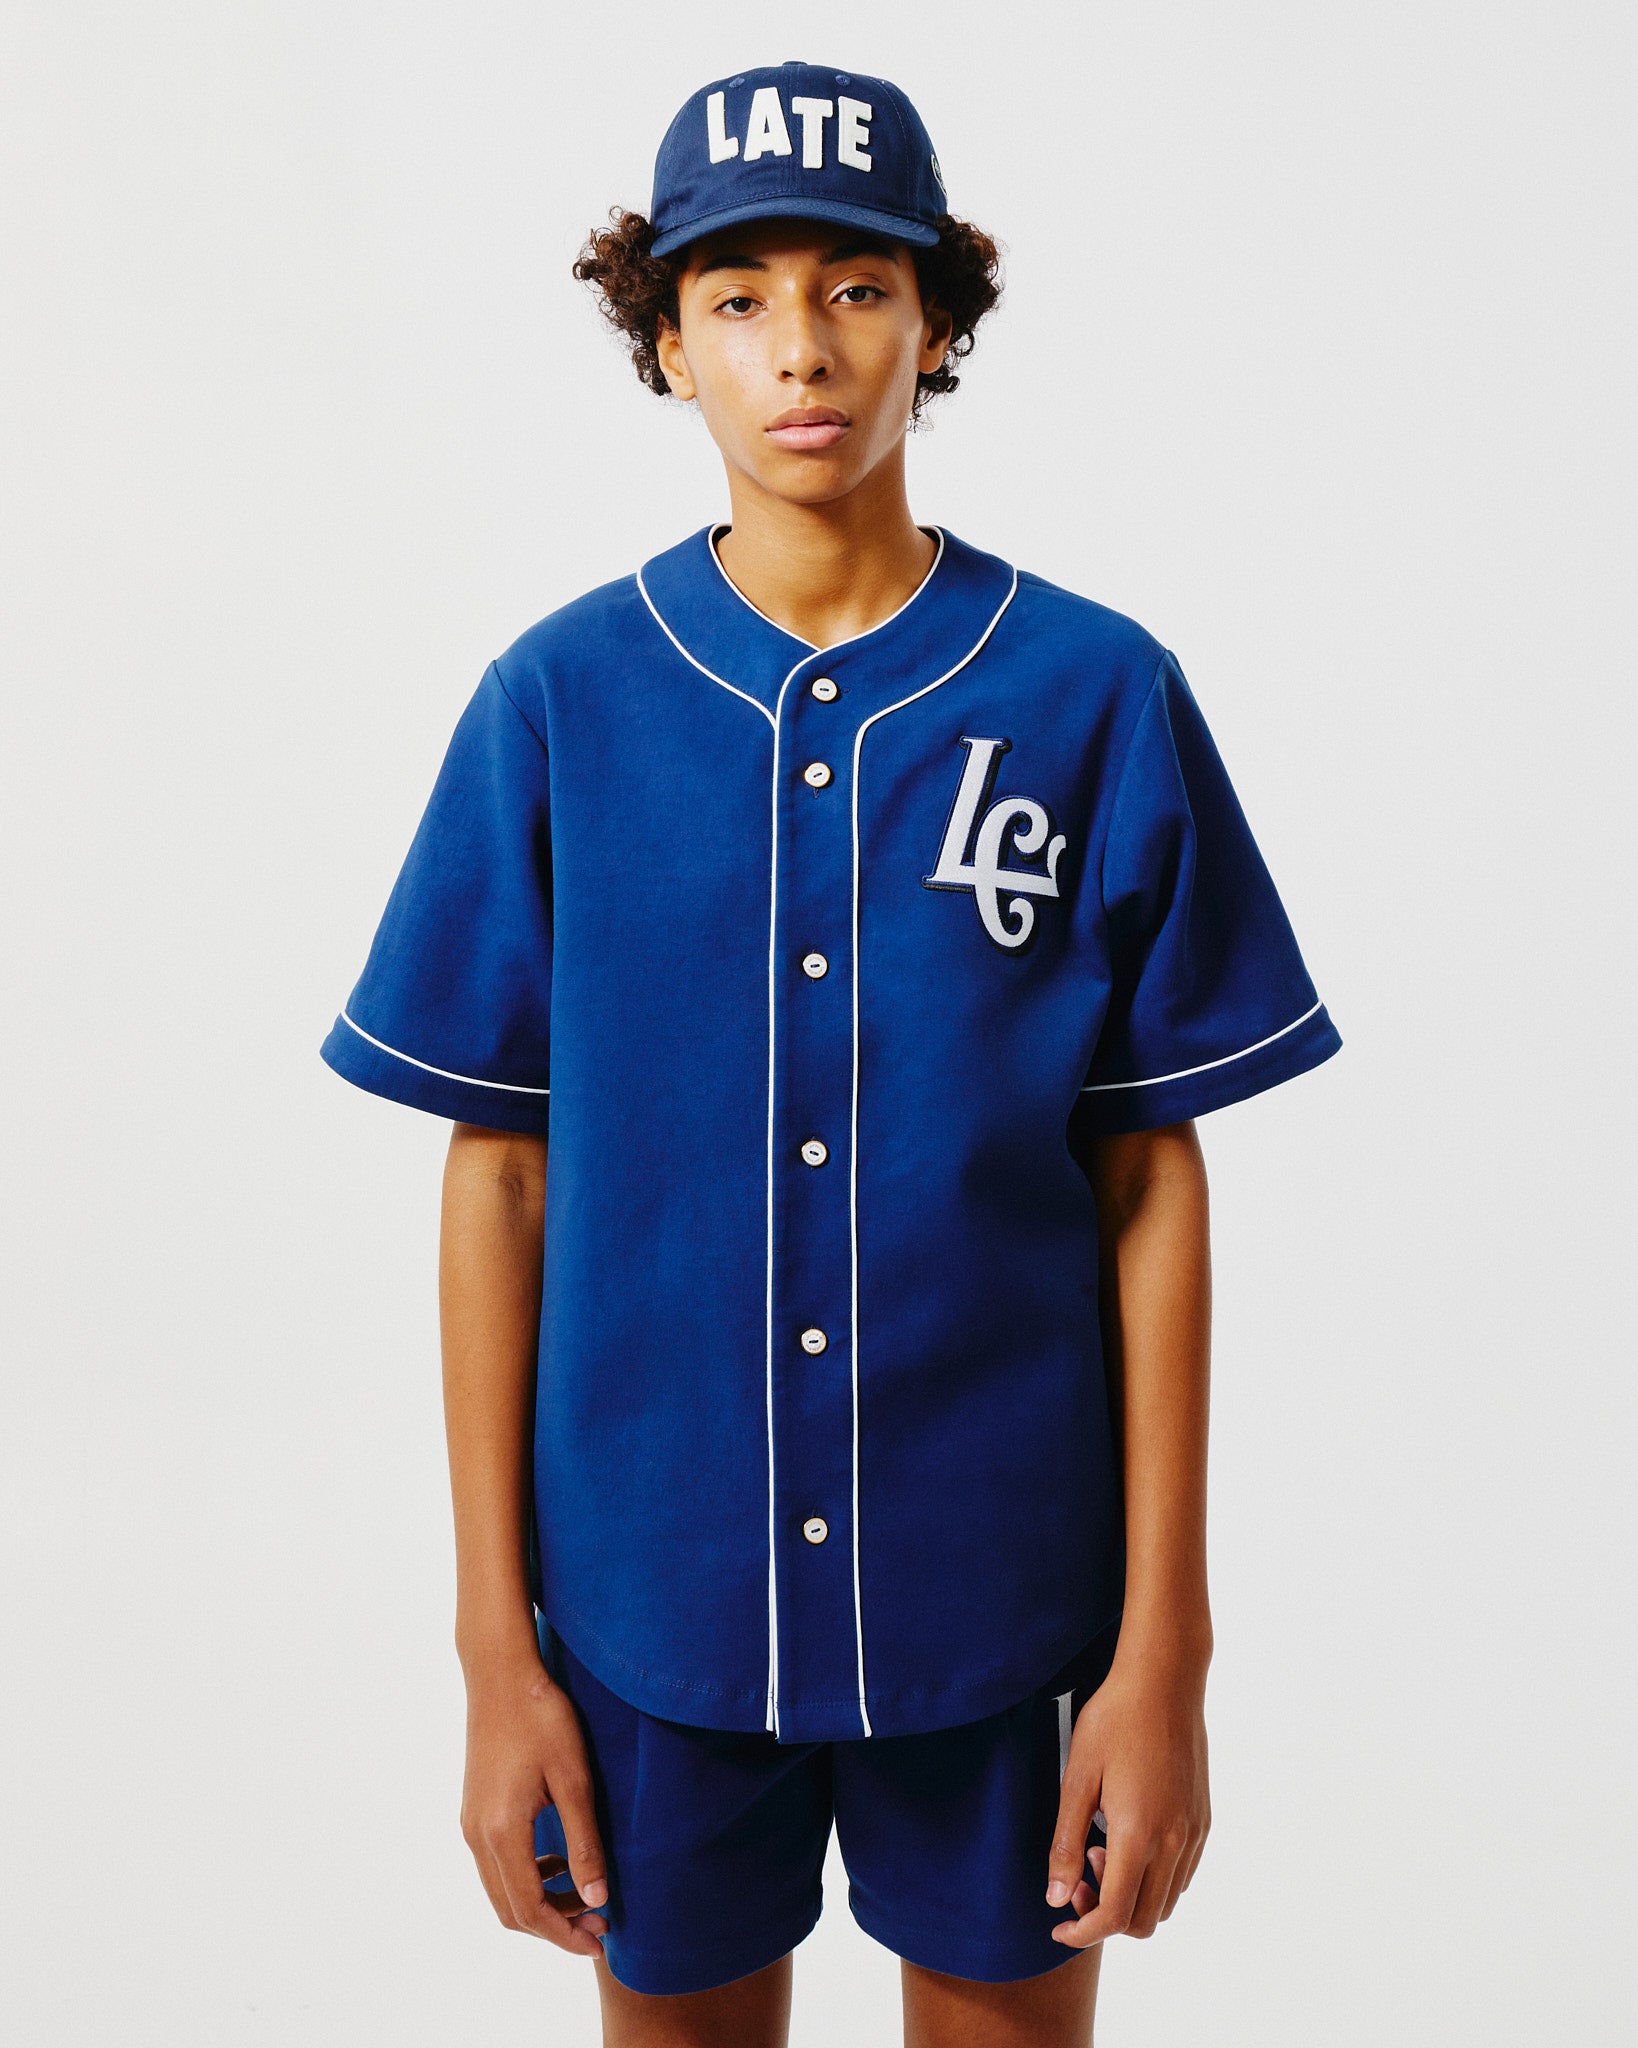 LC Navy Baseball Shirt